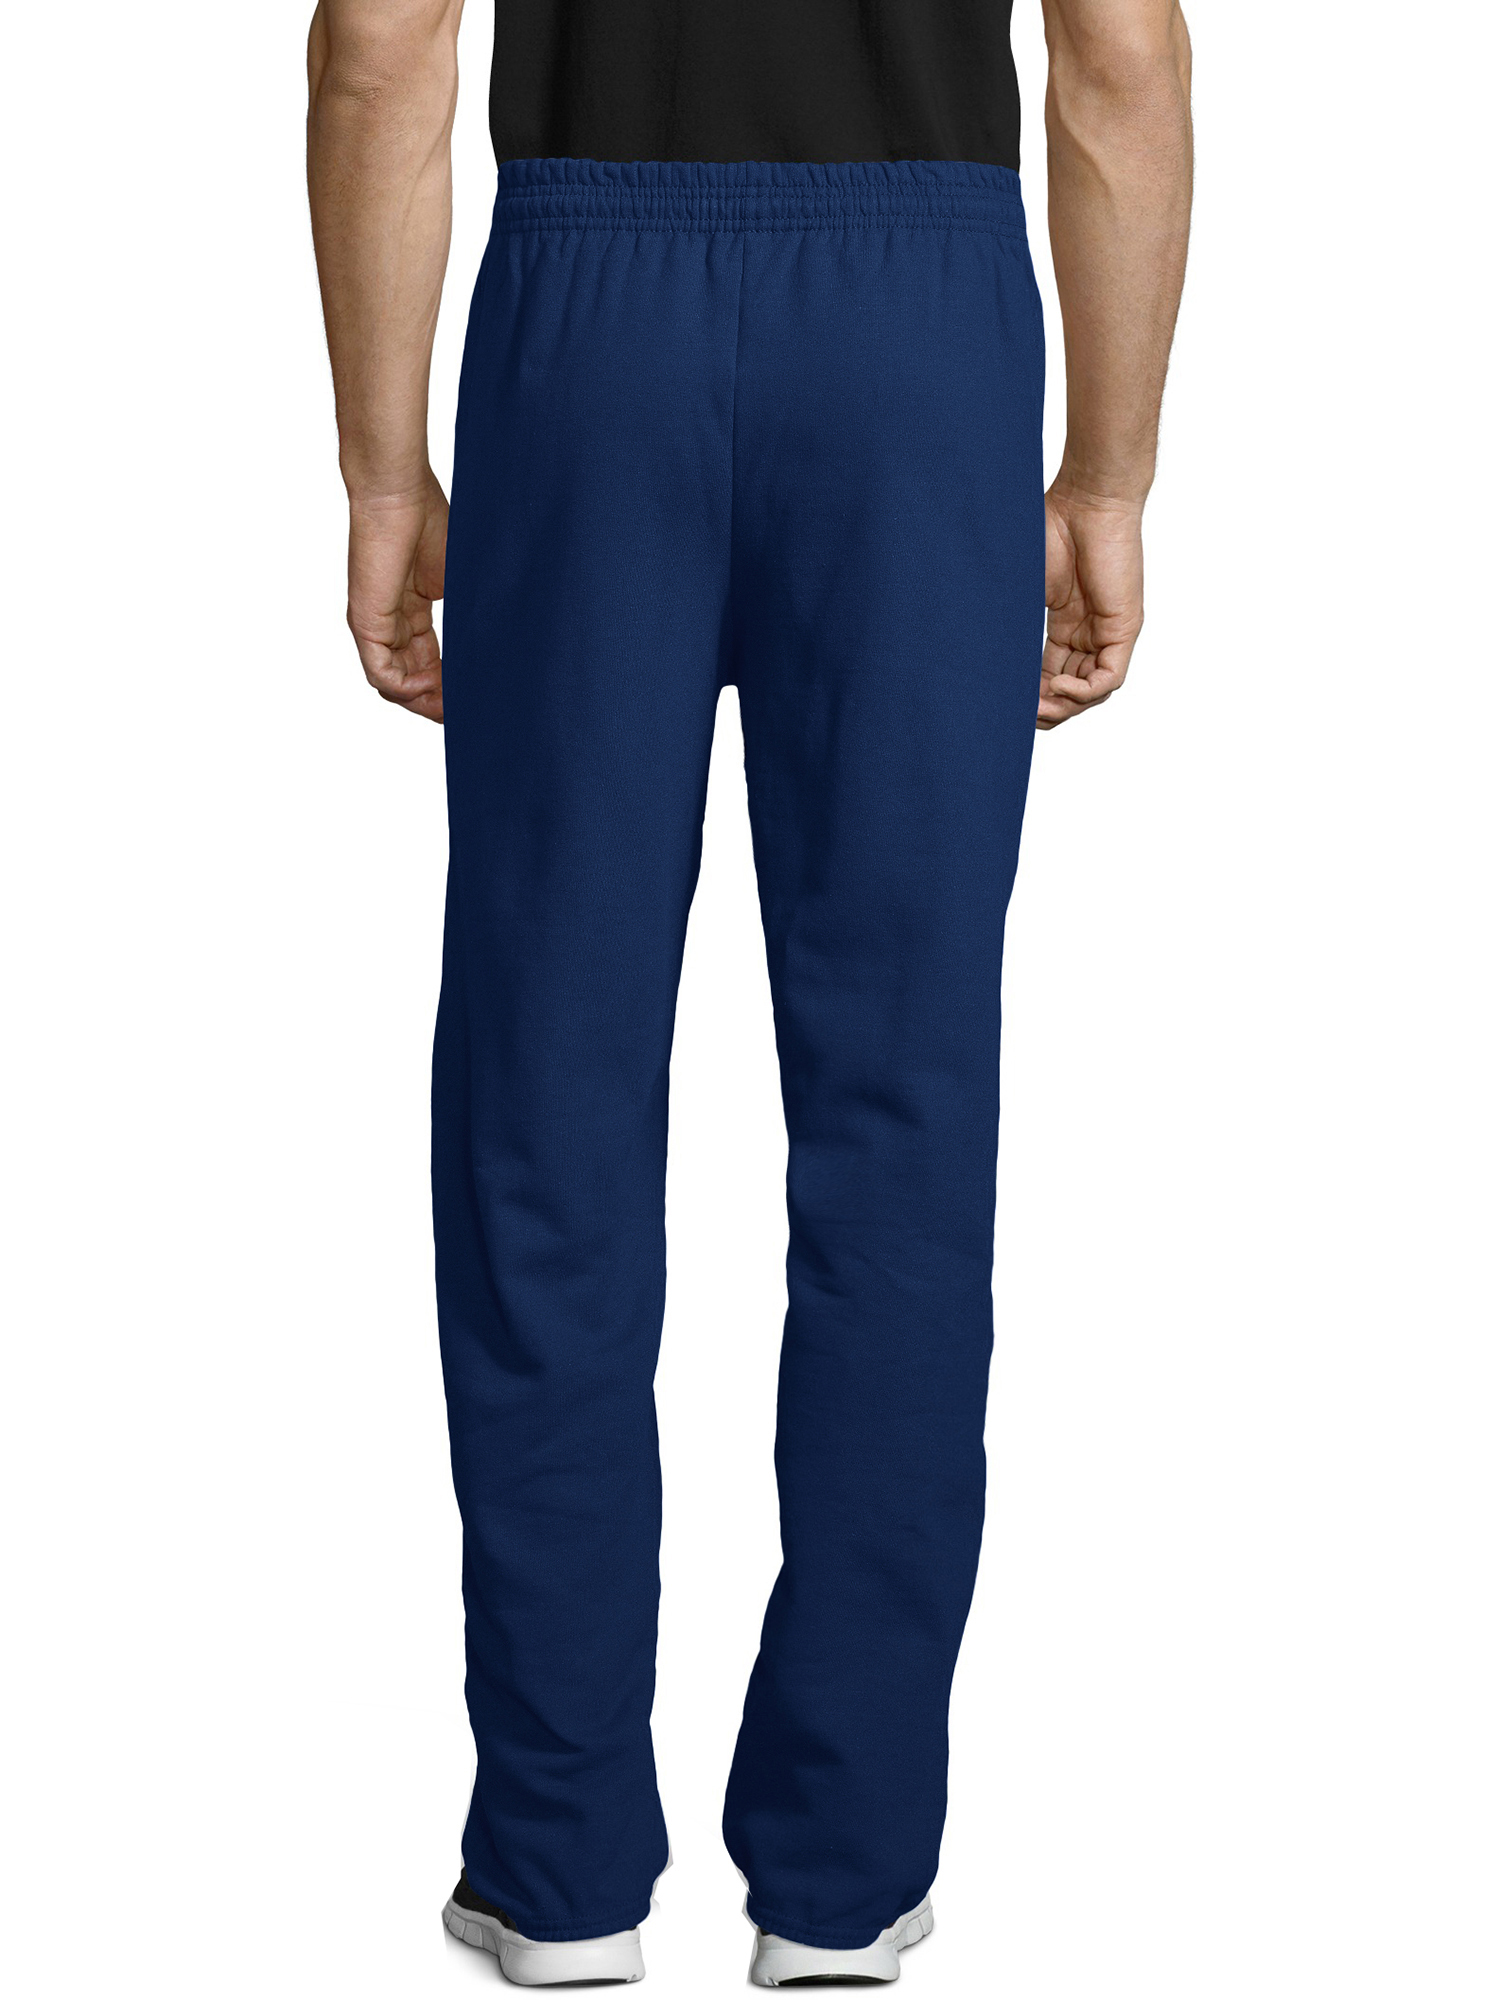 Hanes Men/'s EcoSmart Elastic Bottom 32 Inch Inseam Sweatpants Gray Size M -J2